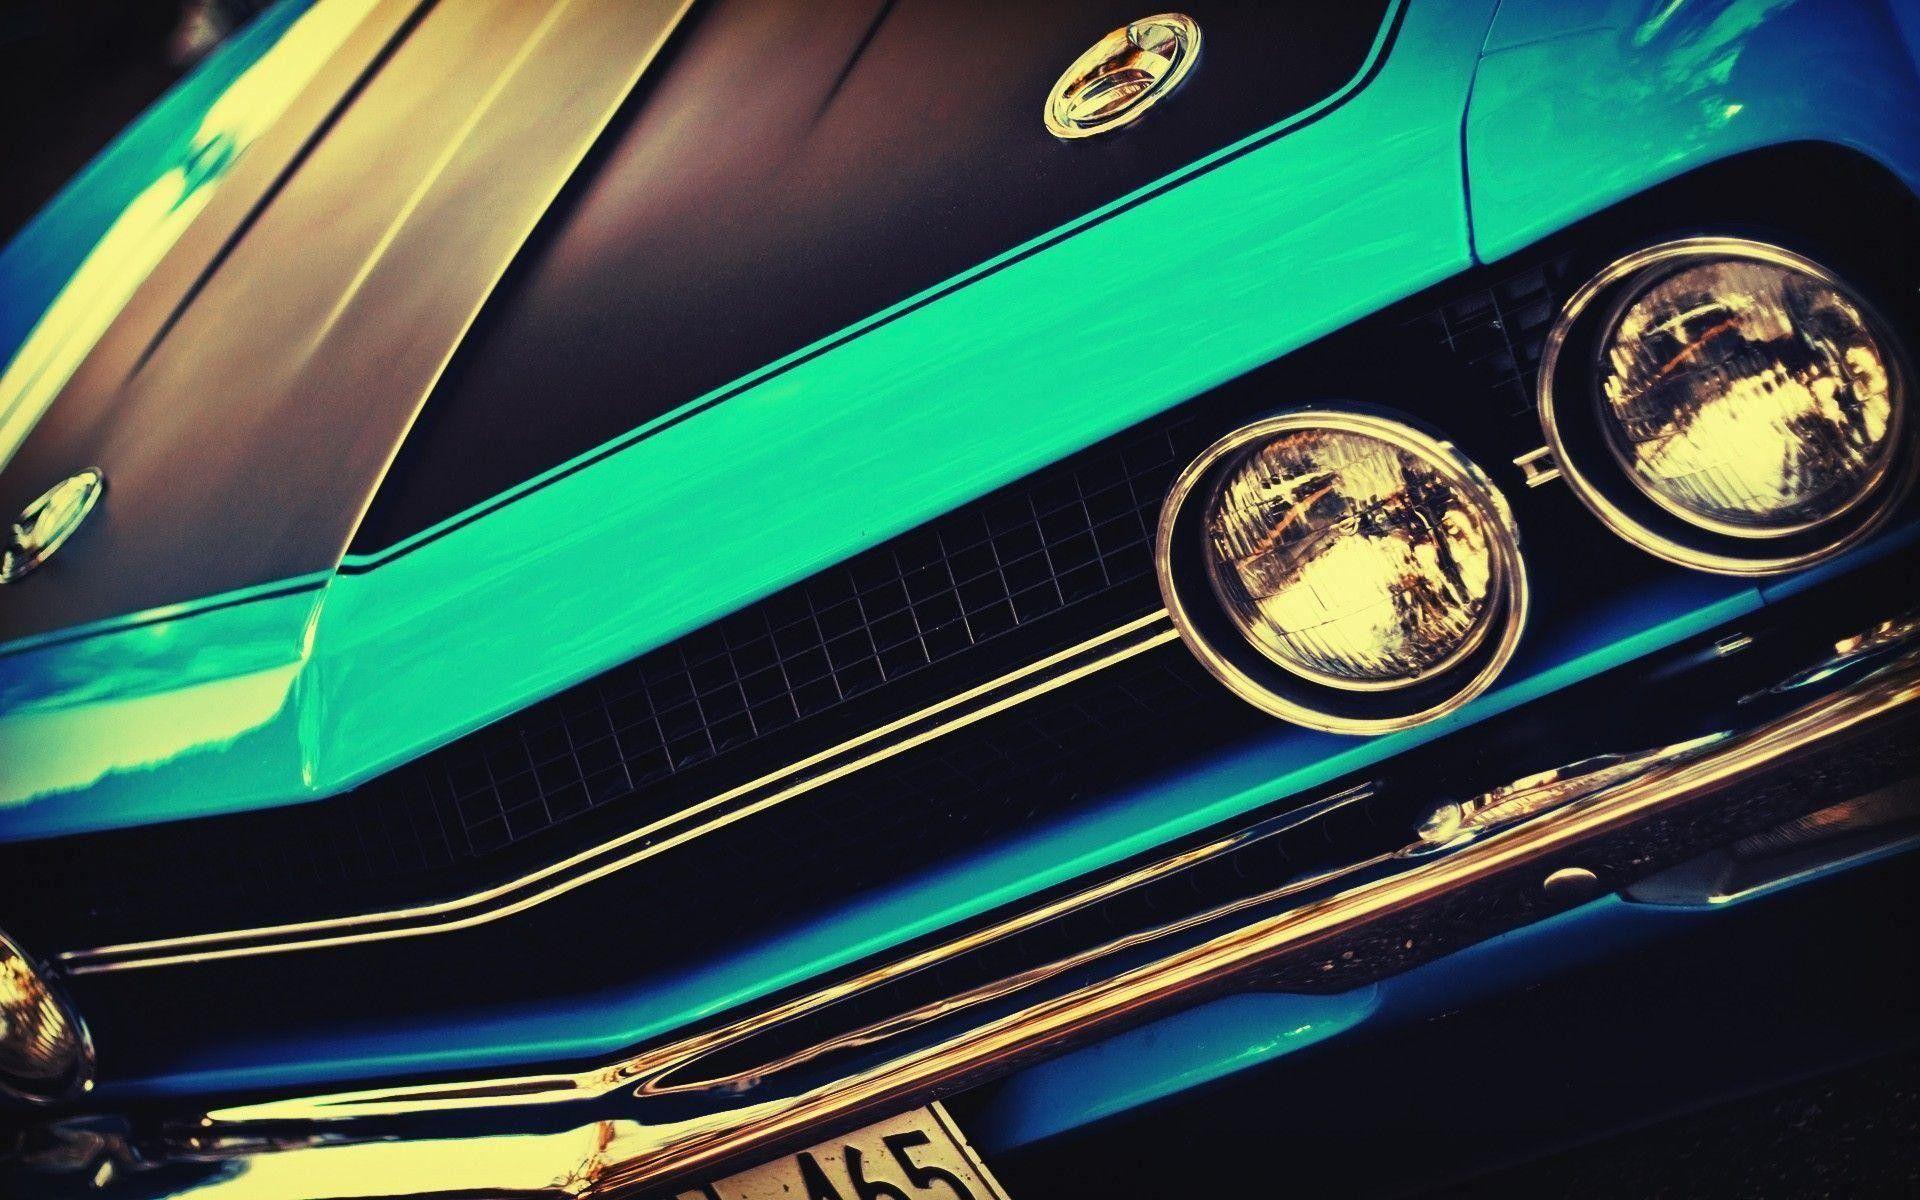 Carros/ Cars - Fondos De Pantalla De Mustang Shelby, Tumblr Car HD phone  wallpaper